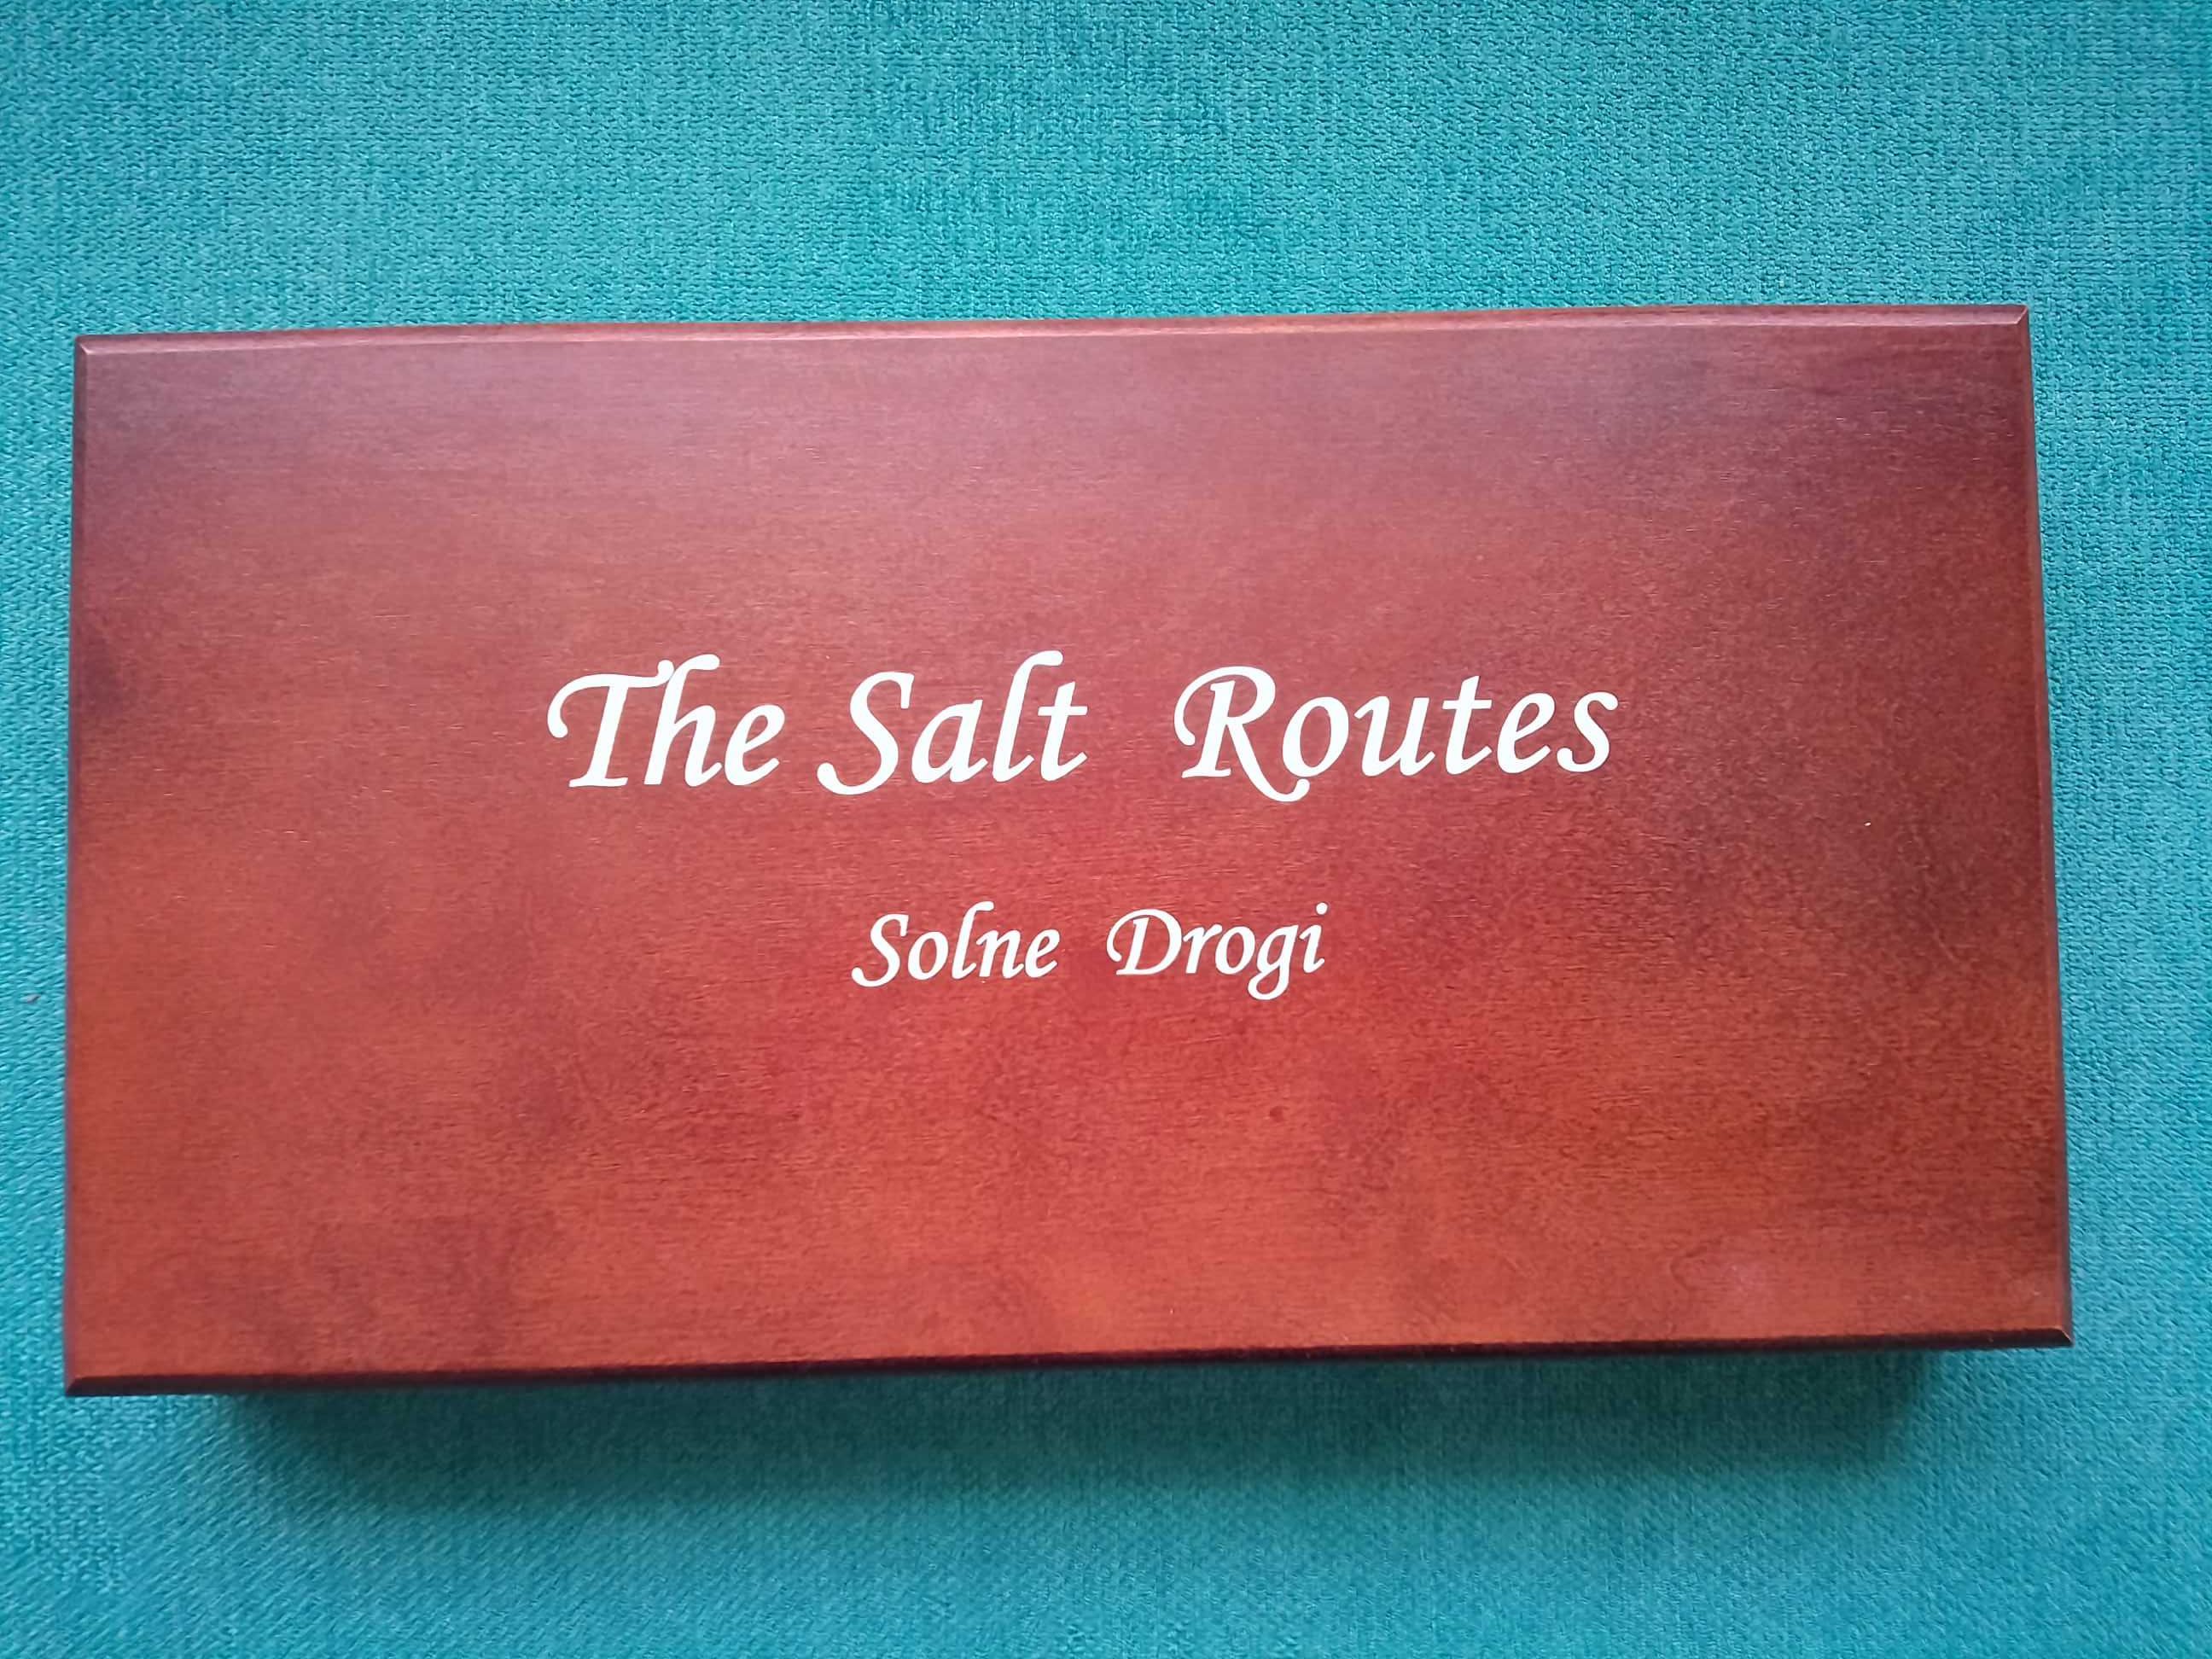 Szlak solny - monety z serii „THE SALT ROUTES”